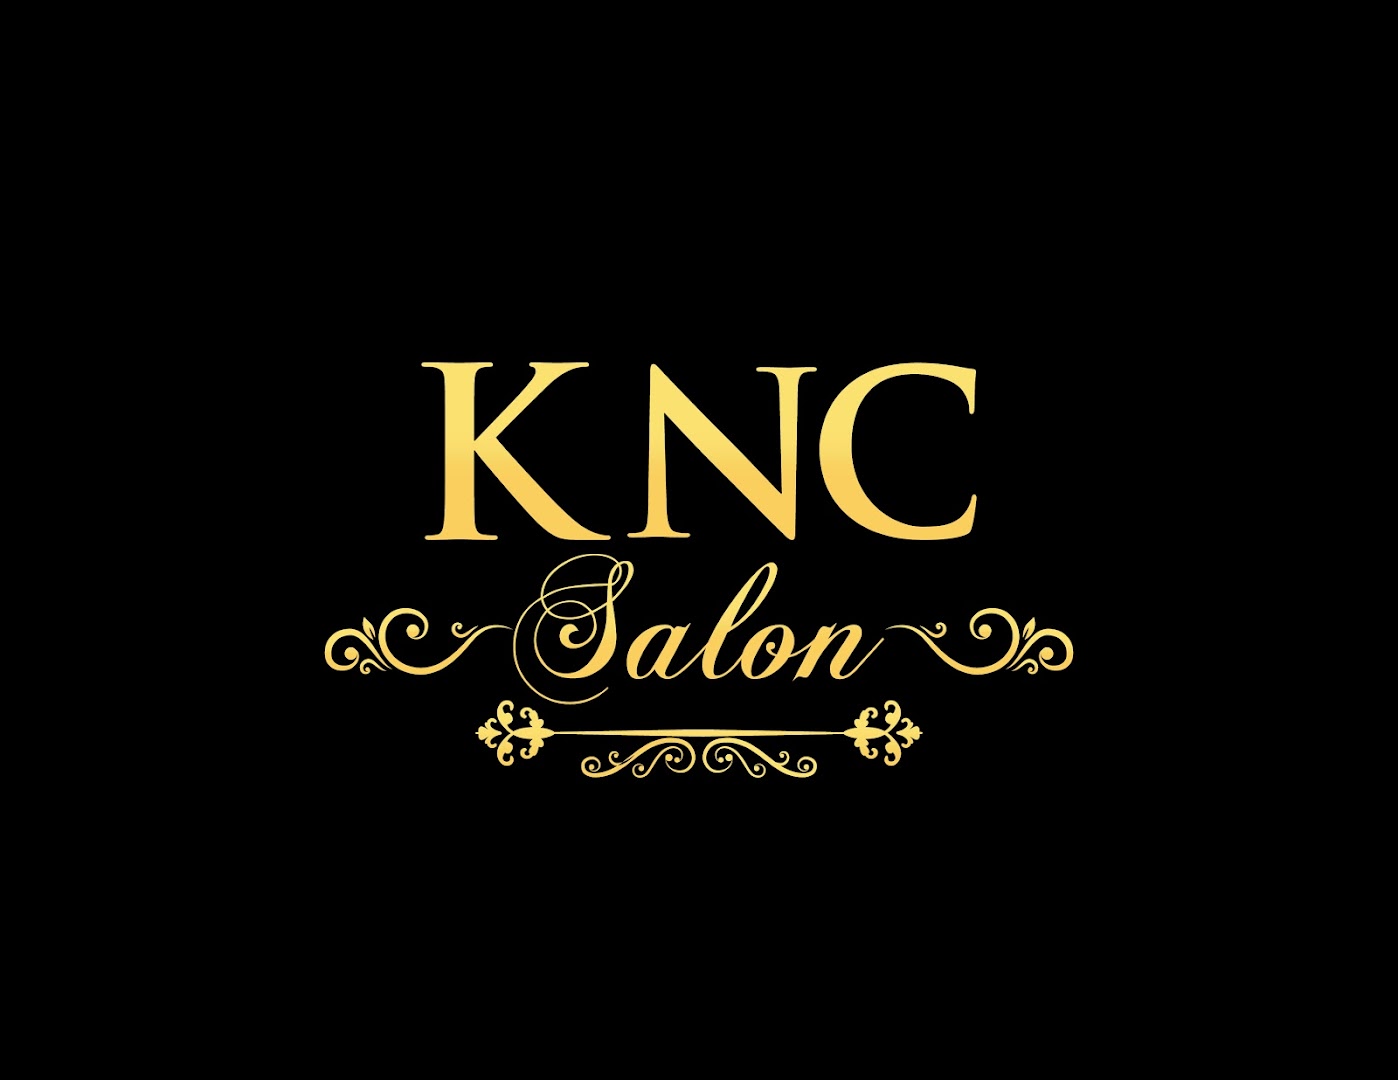 KNC Salon llc